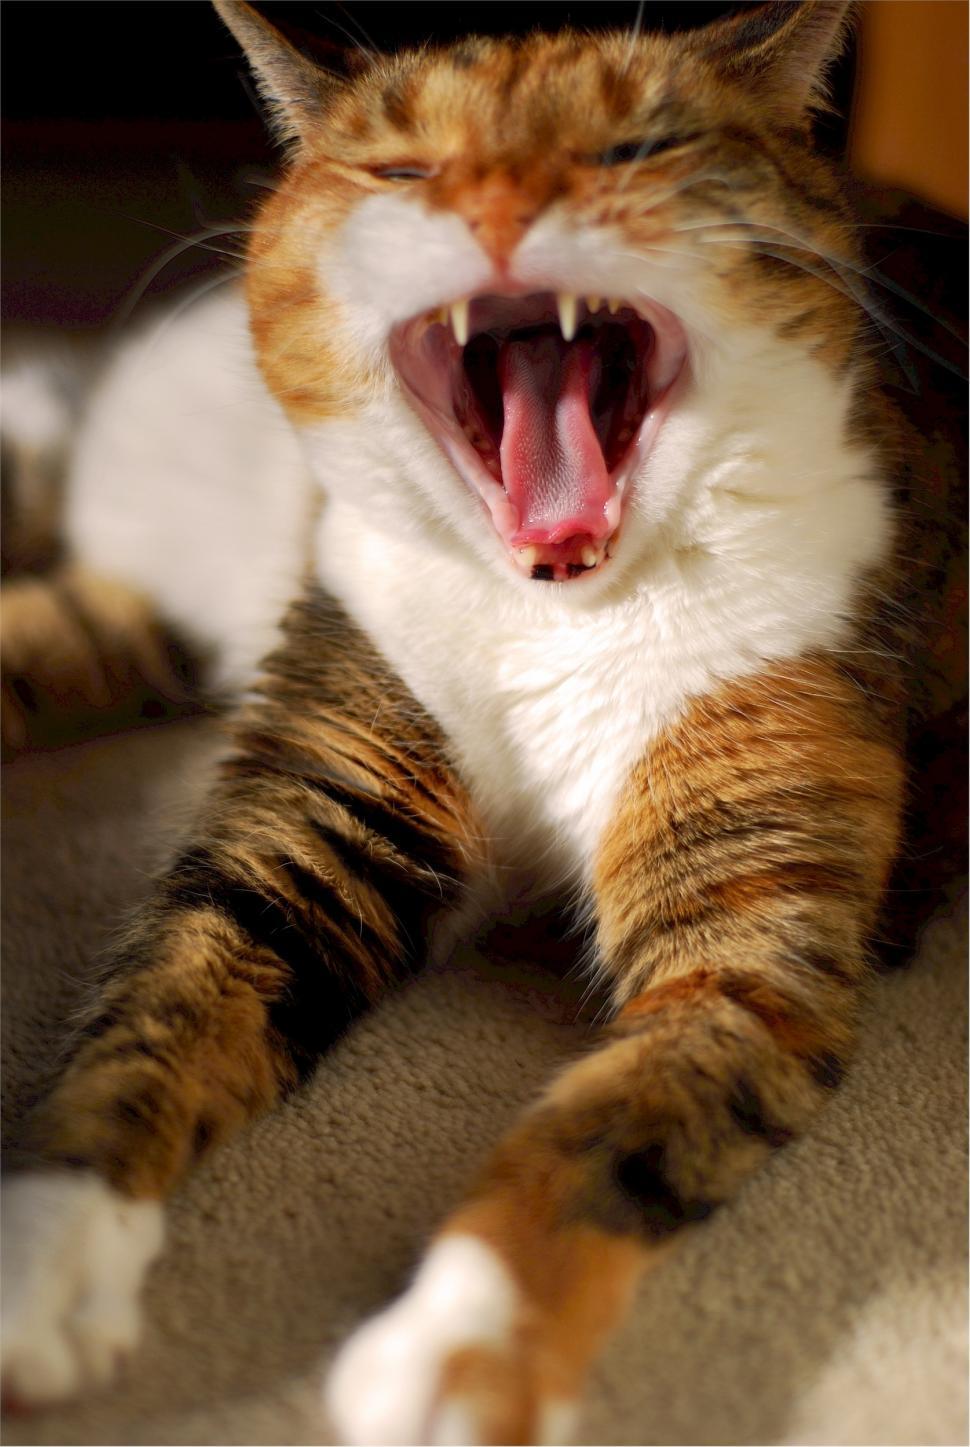 Free Image of Cat Yawns on Floor 